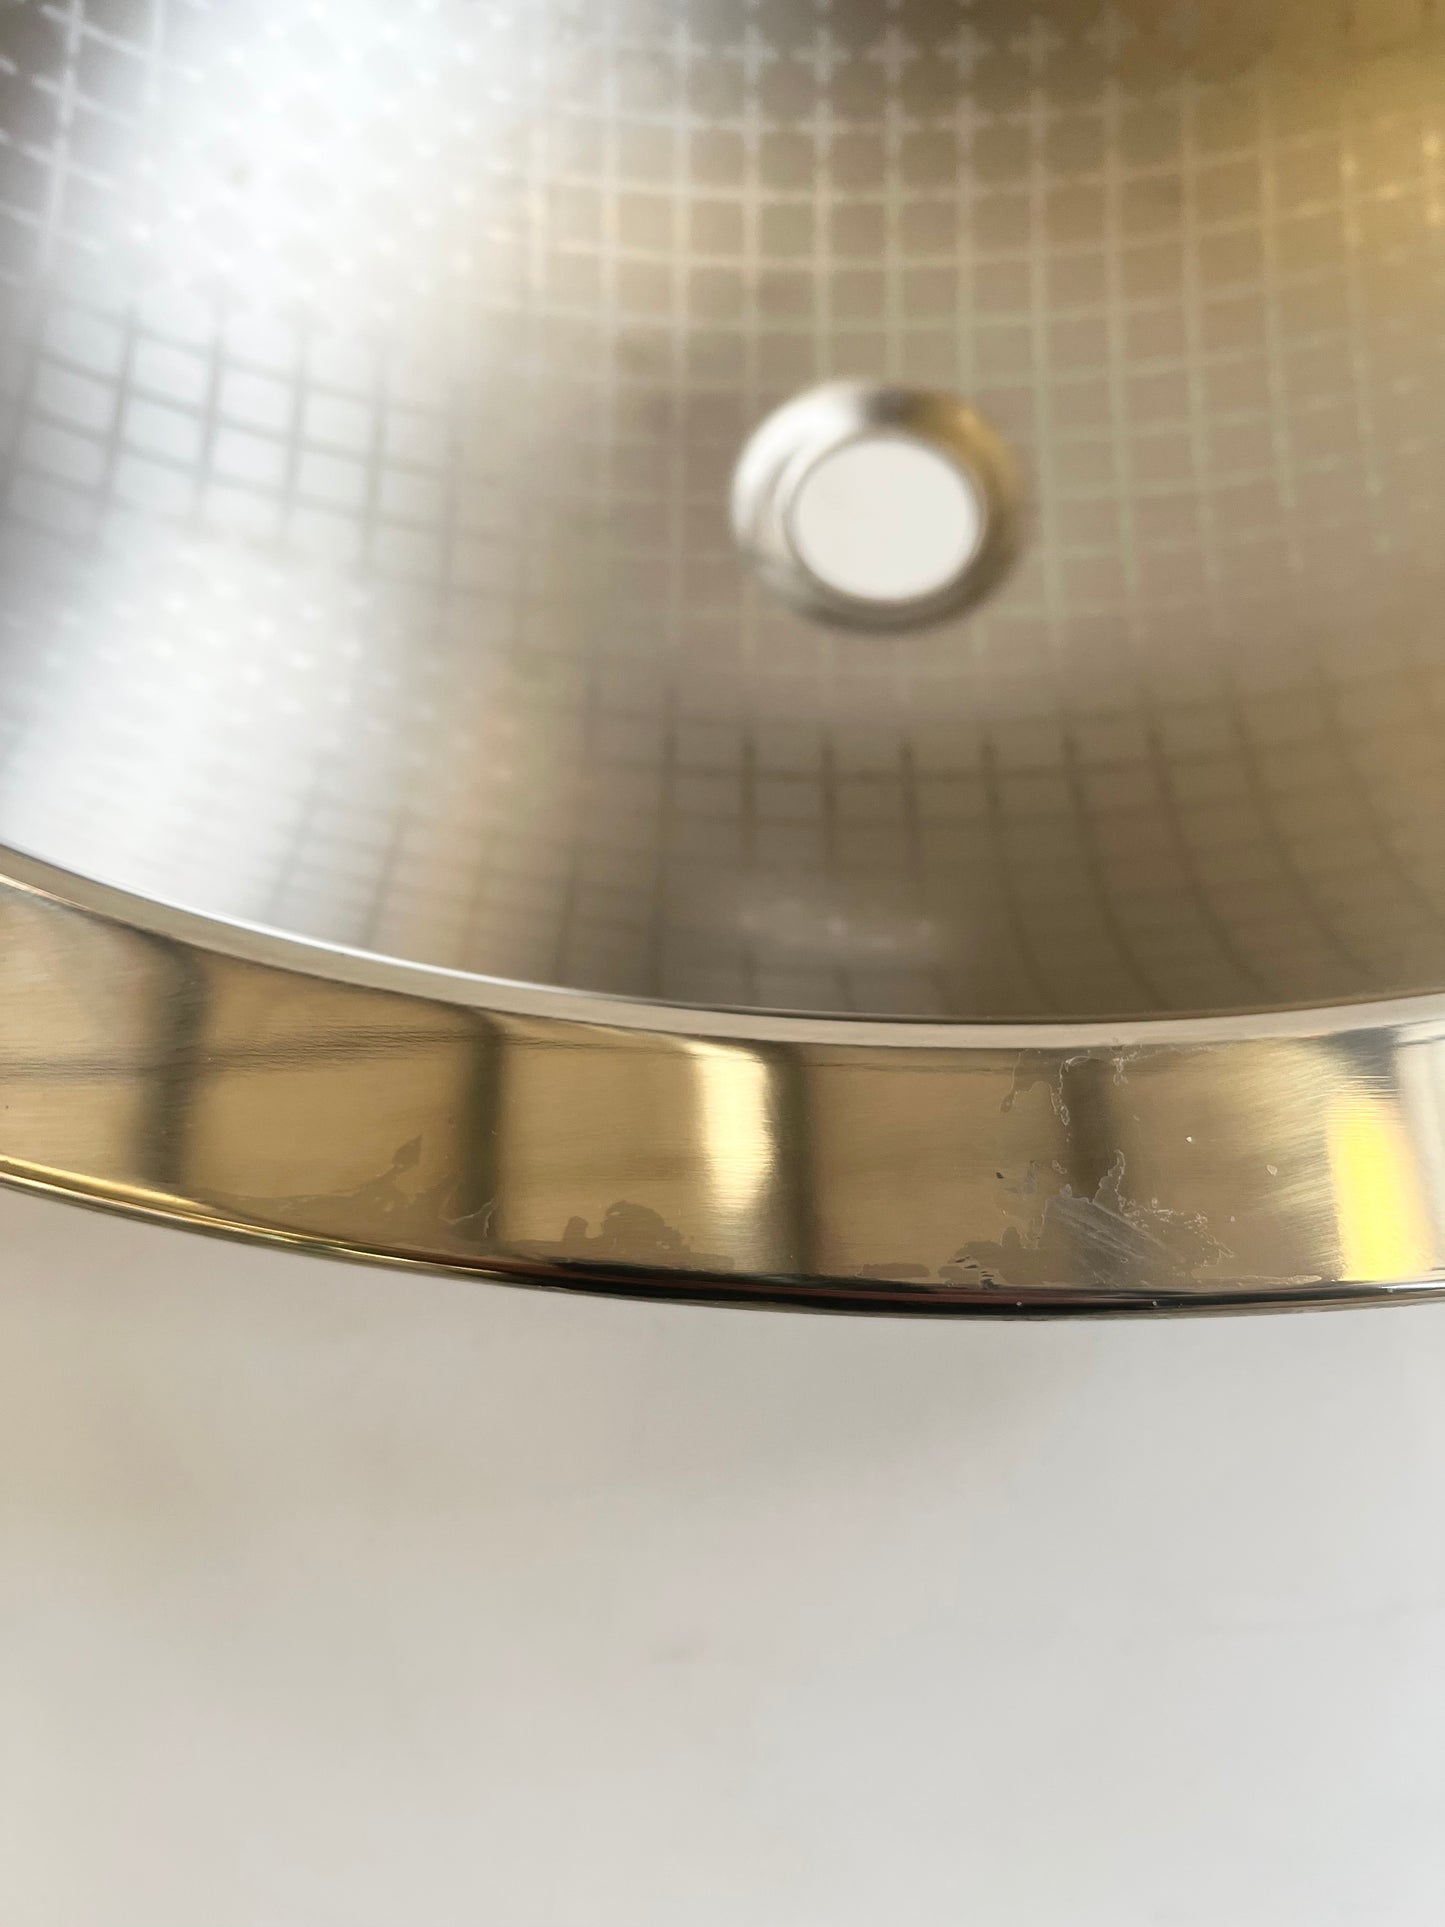 Round Kohler Drop-in Sink  with Grid Pattern